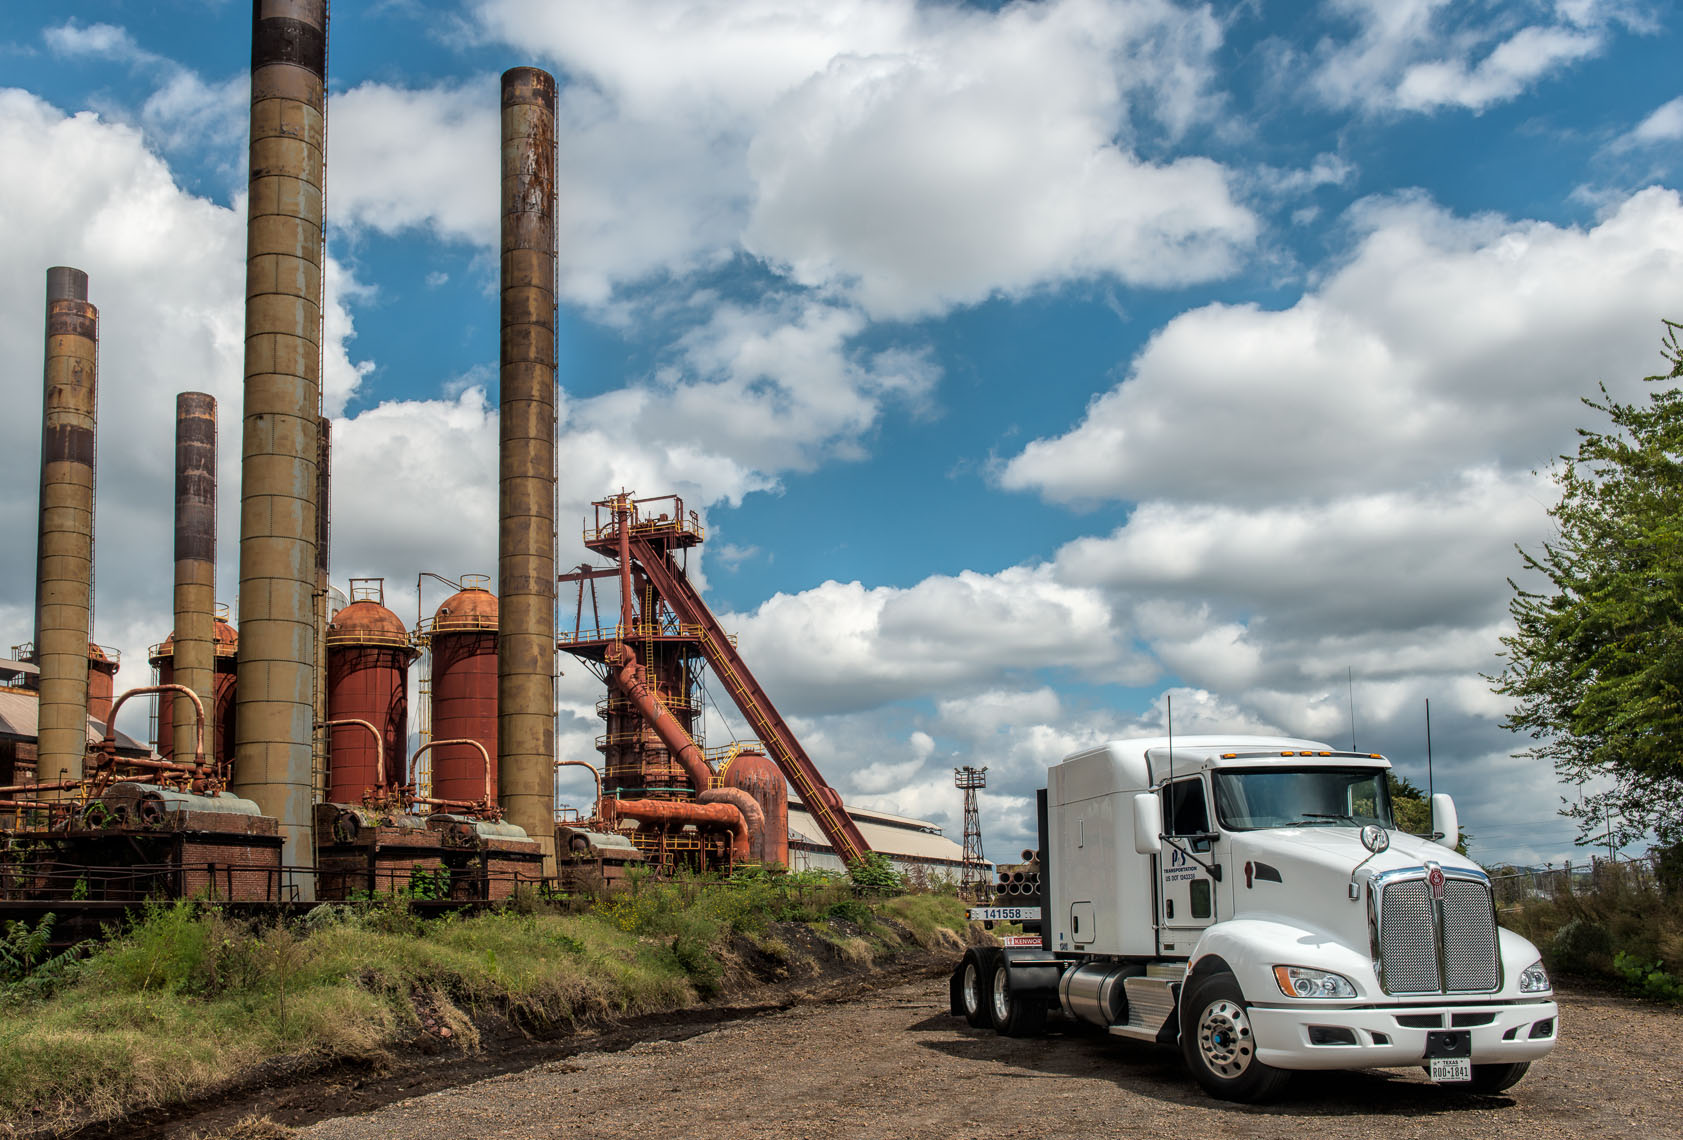 Freight Transport Company,  William Bragg, commercial photographer, Portland, Oregon.